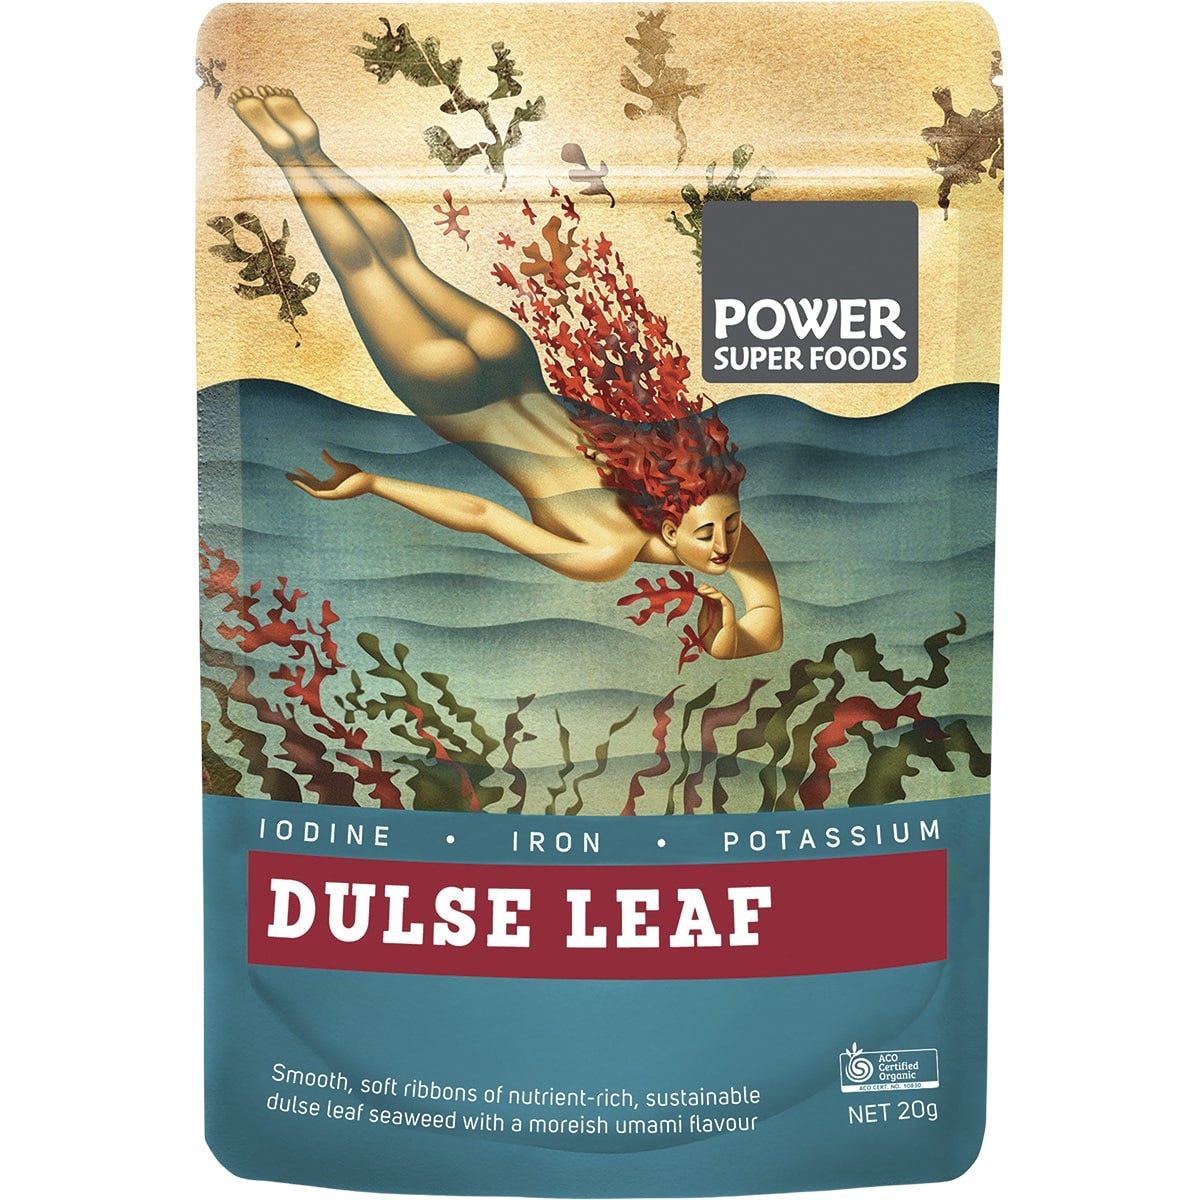 Power Super Foods Dulse Leaf The Origin Series 20g - Dr Earth - Seaweed